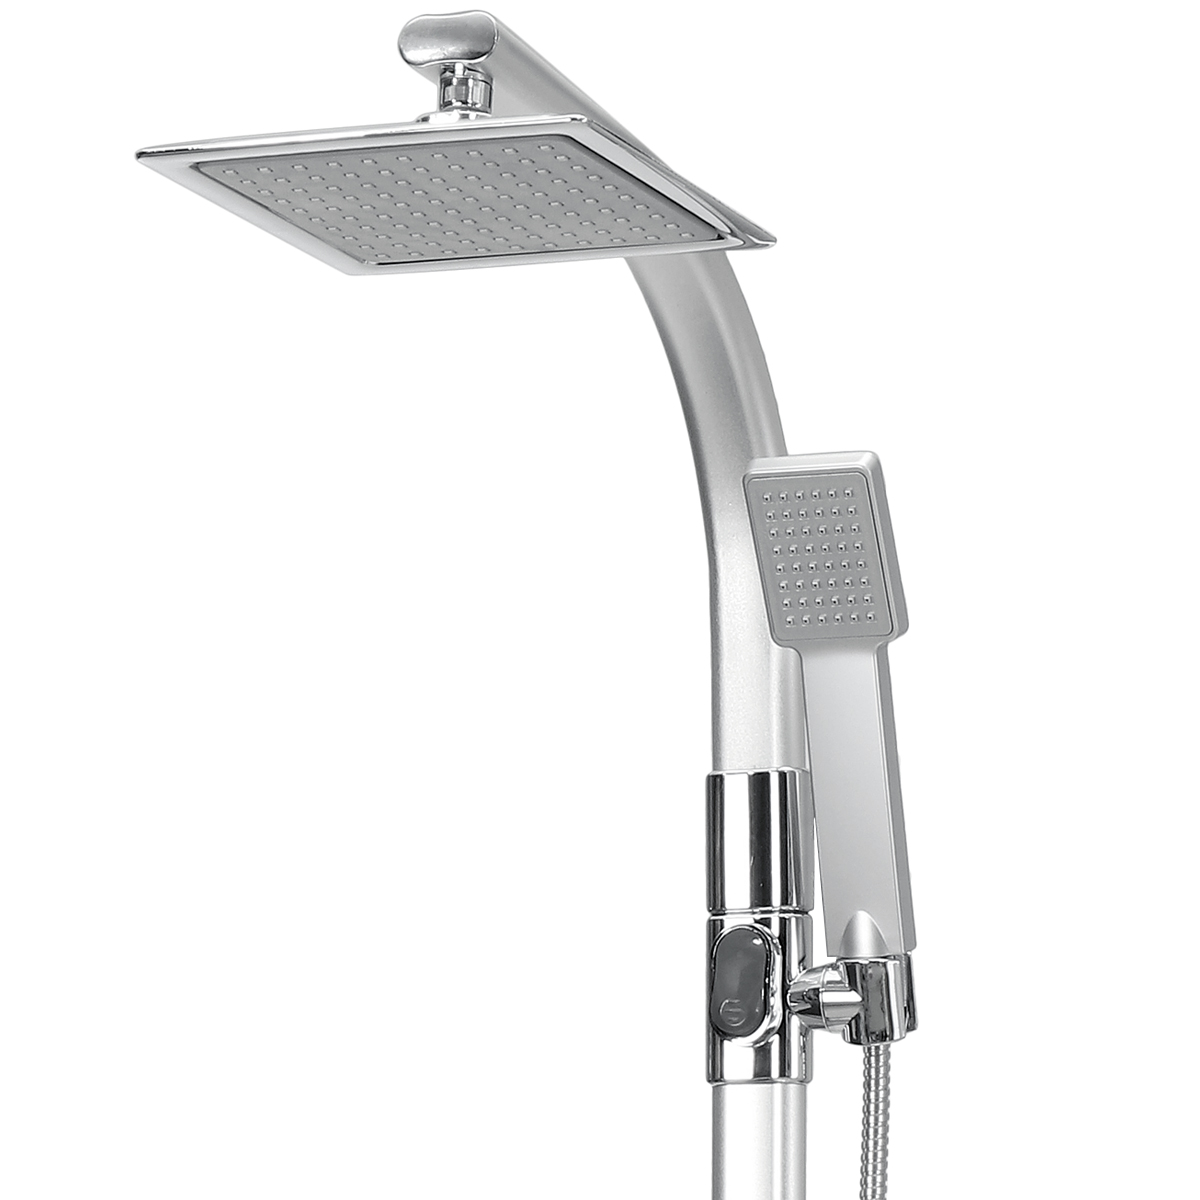 Shower Faucet Shower System Rain Shower Shower Set With Hand Shower Soap Holder Chrome